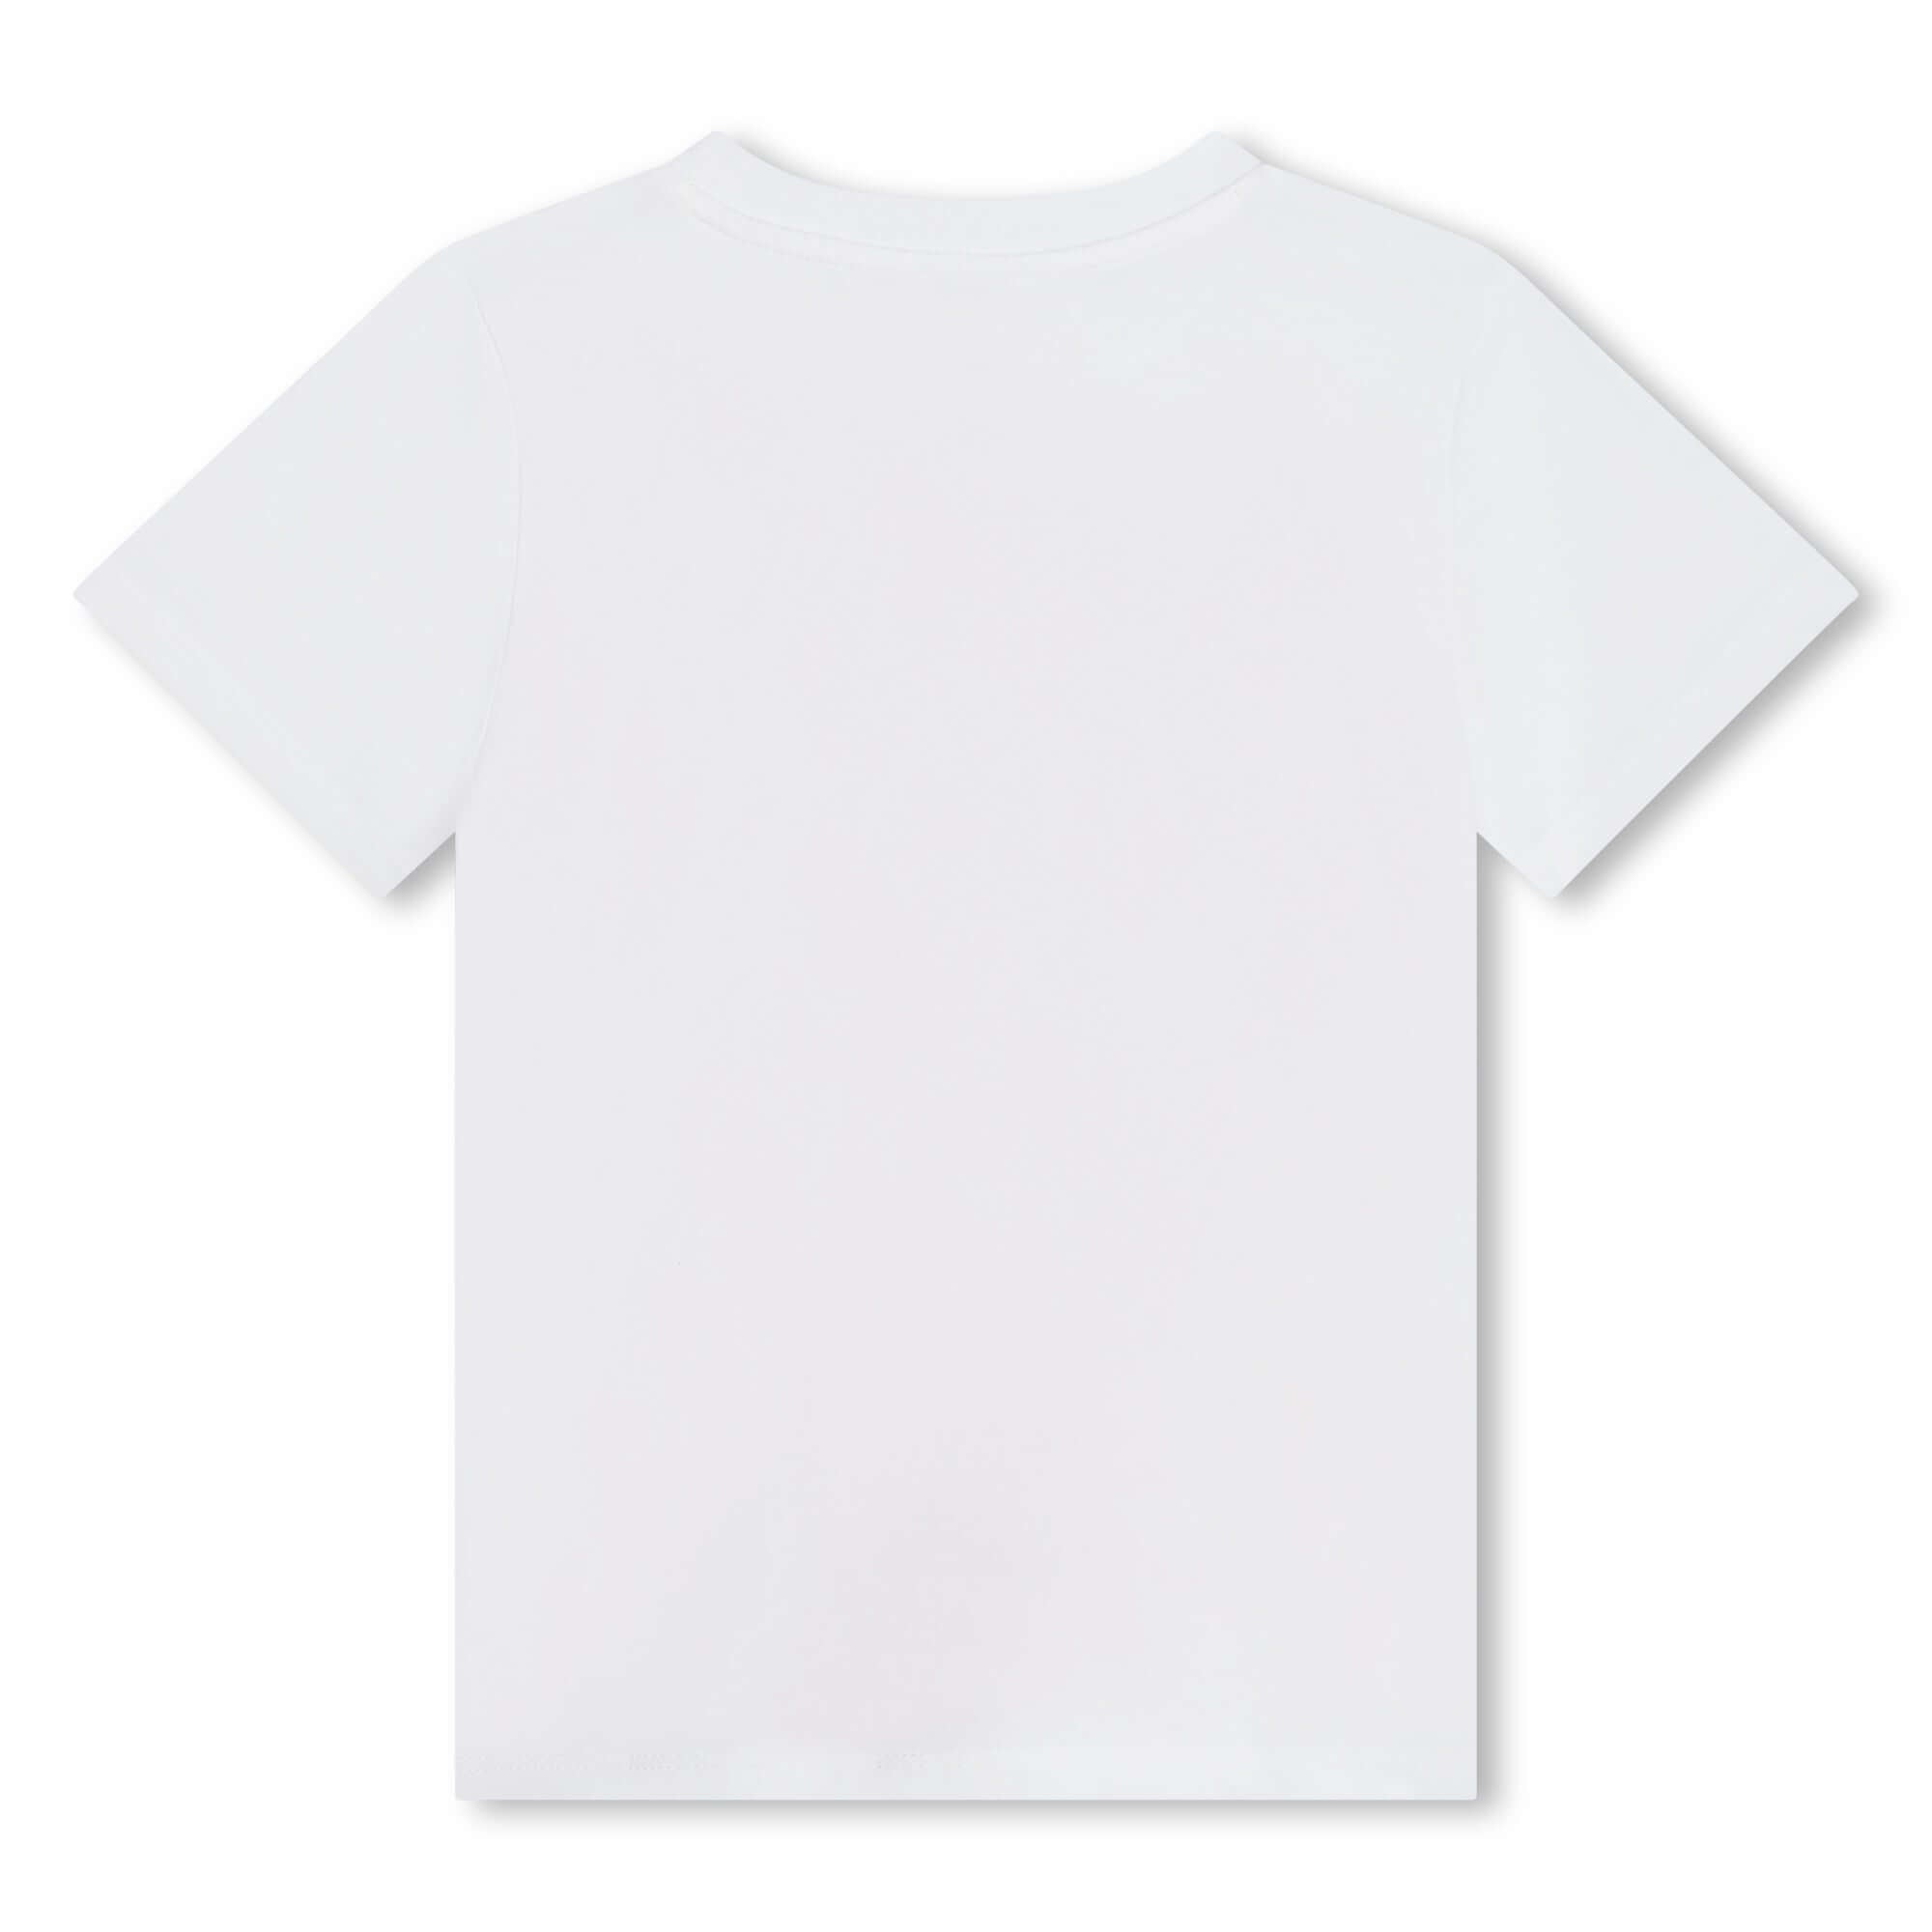 Kenzo Kids Boys White Elephant Print T-Shirt